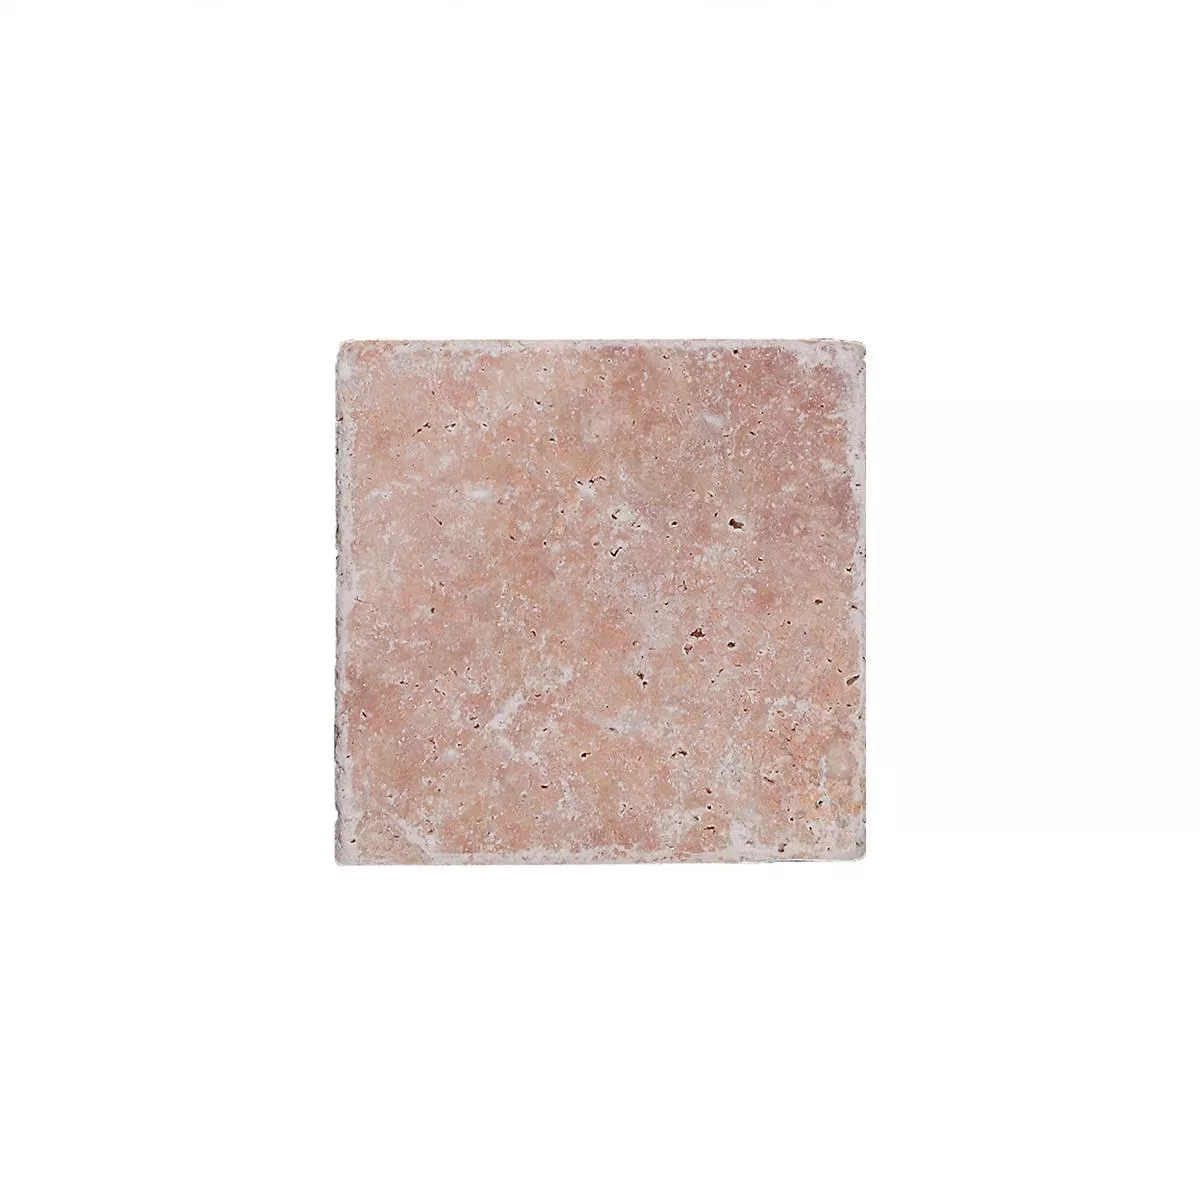 Sample Natural Stone Tiles Travertine Usantos Rosso 10x10cm